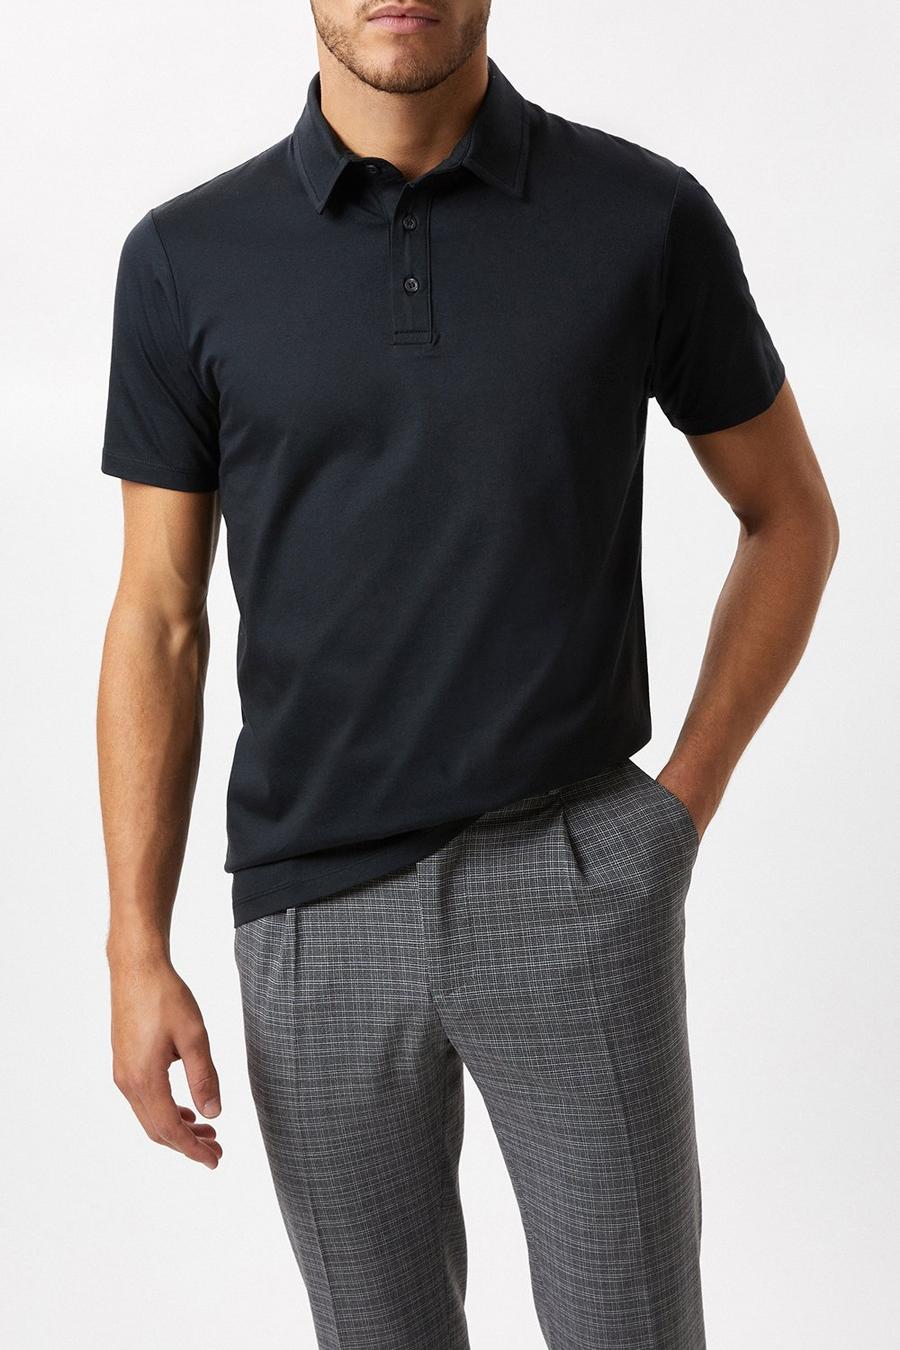 Black Premium Mercerised Cotton Polo Shirt